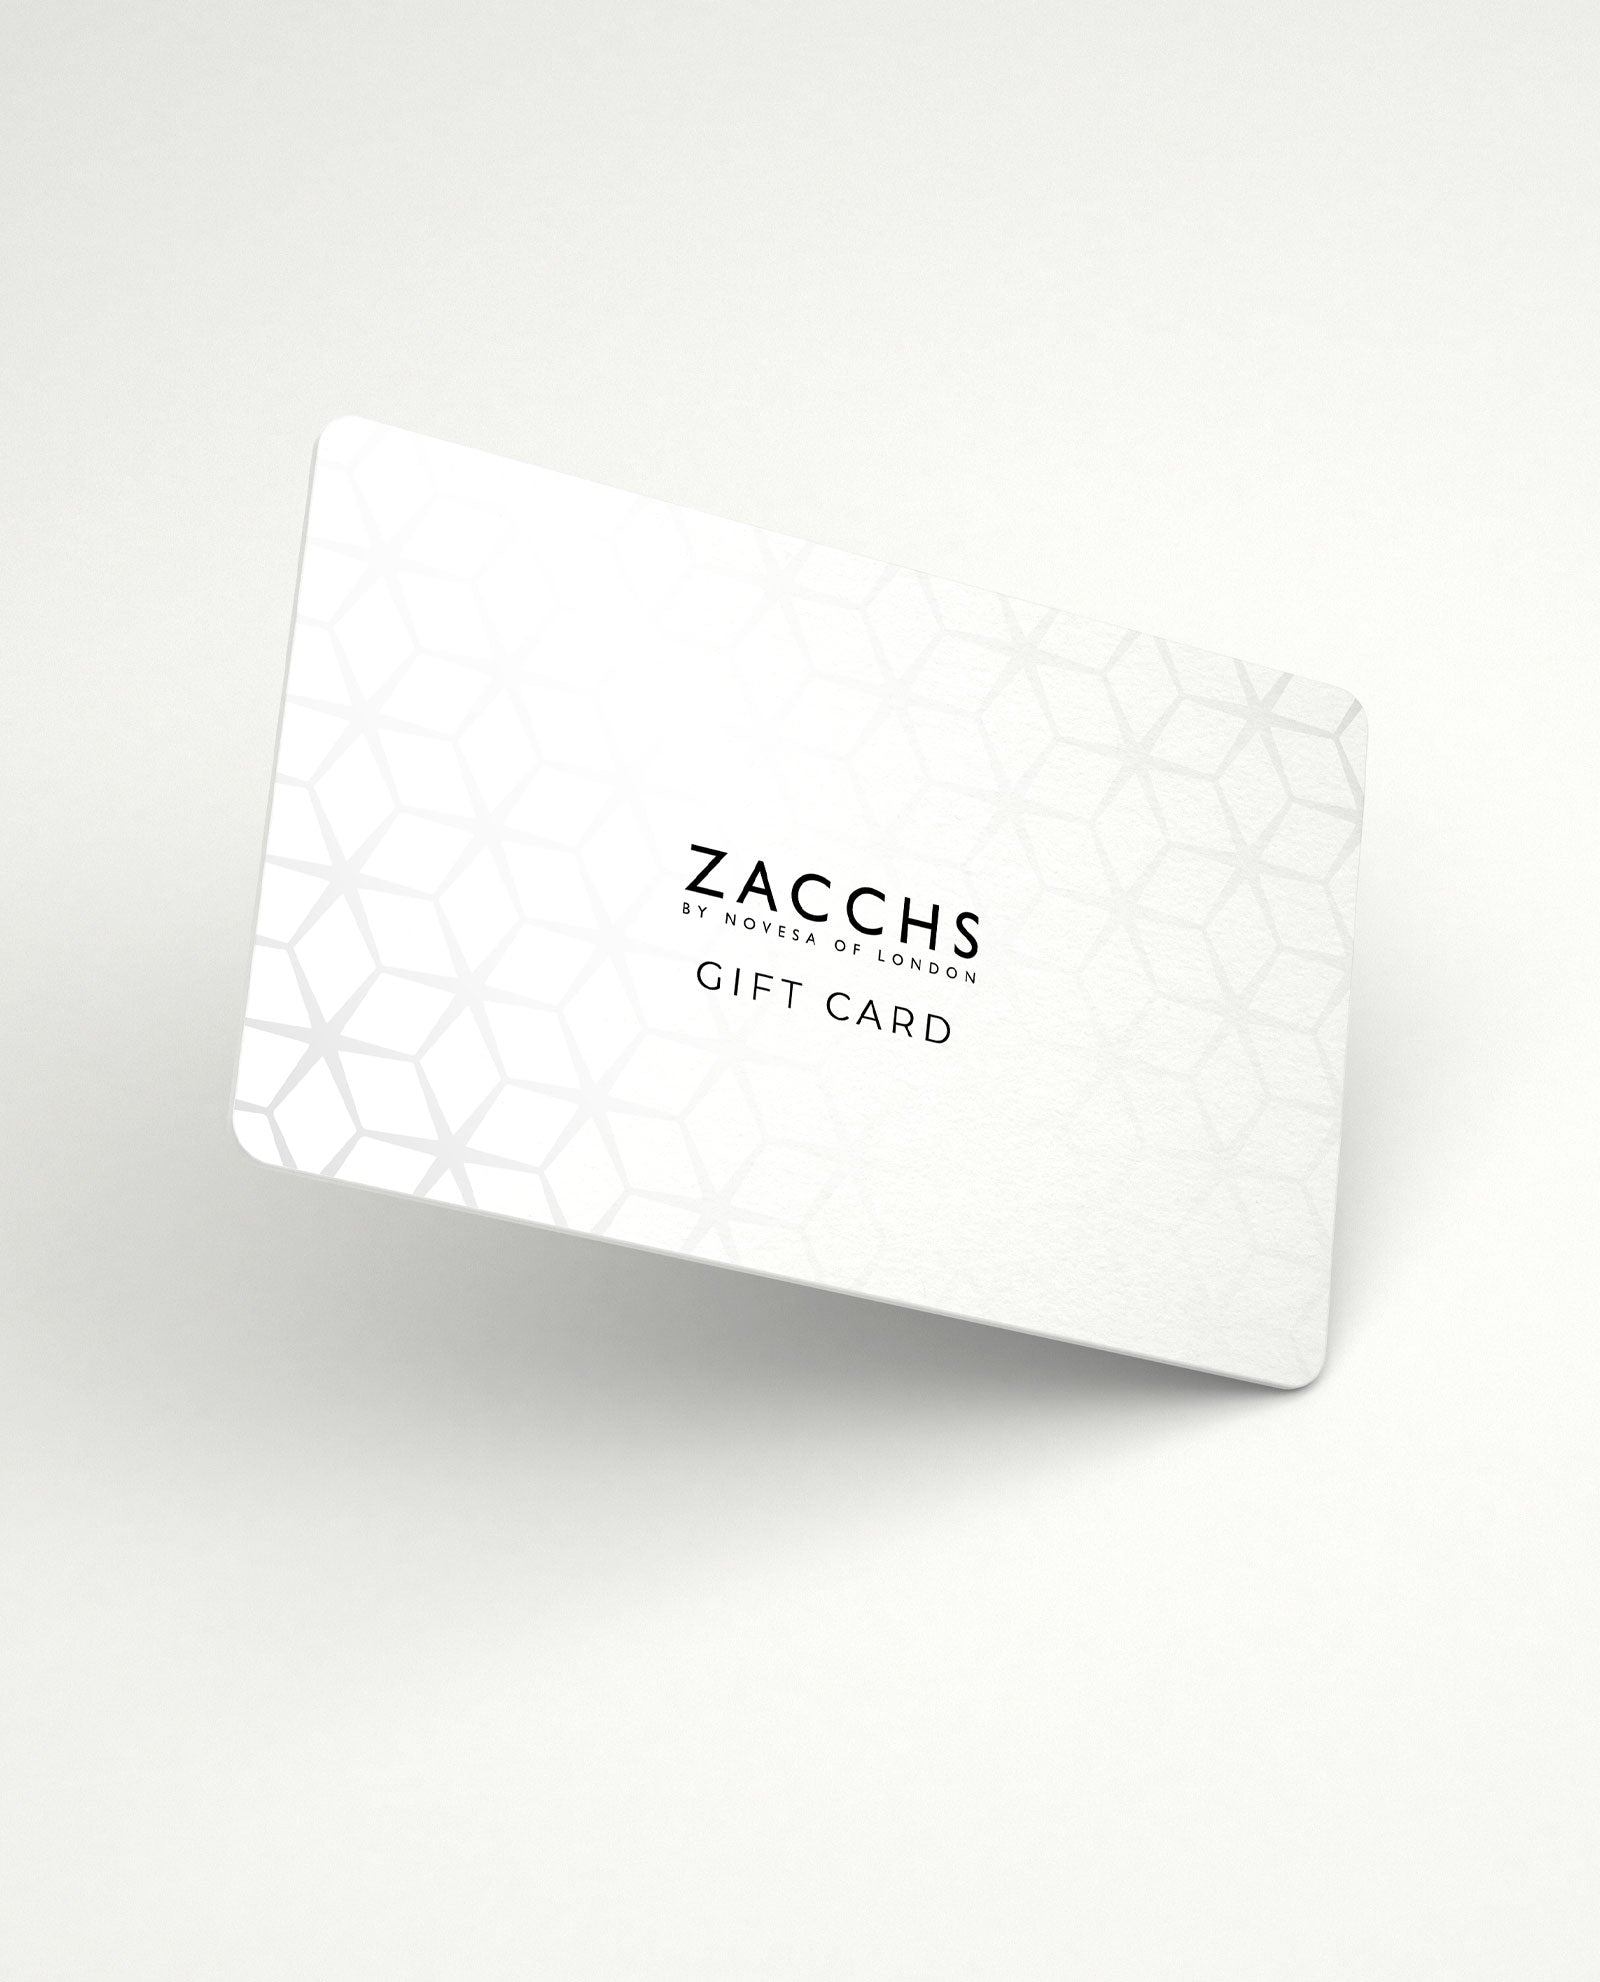 Zacchs Gift Card